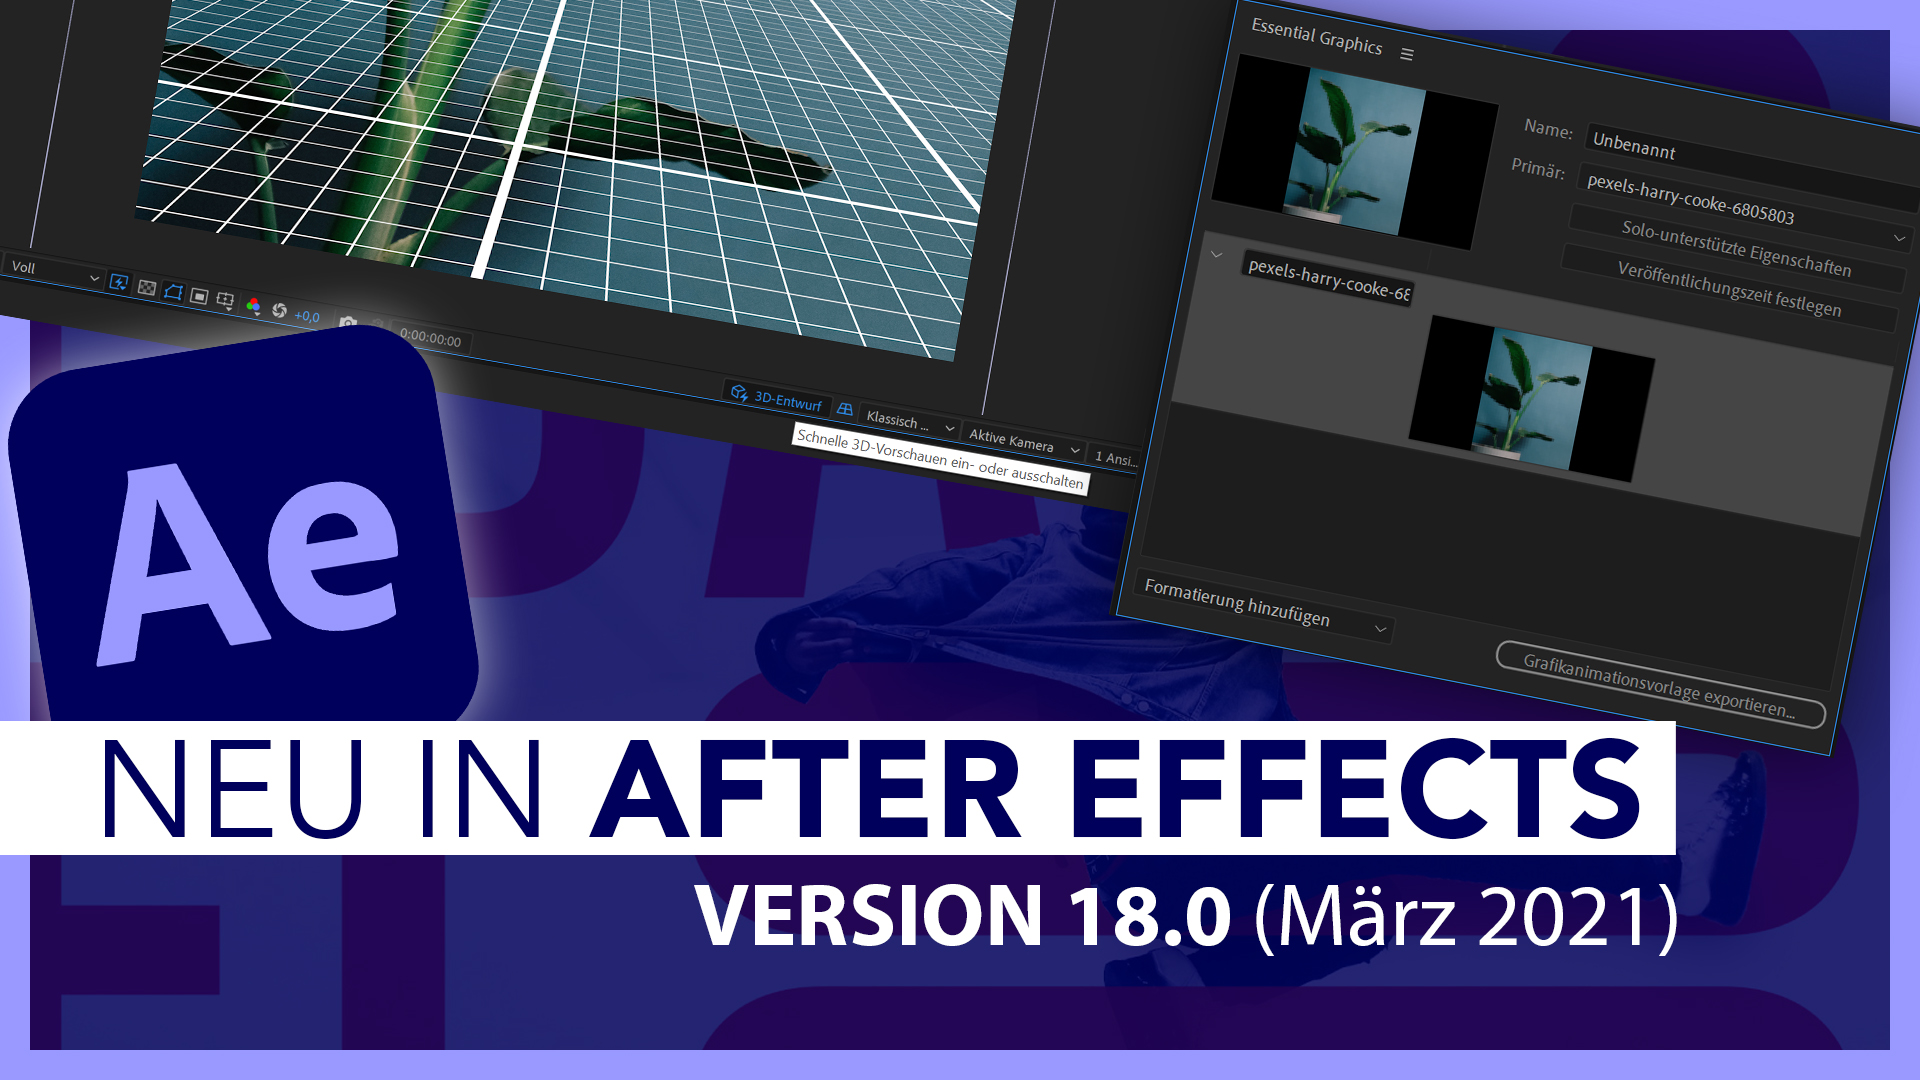 Neu in Adobe After Effects V18.0 (Alle Funktionen im Überblick): Medien in MoGraph Vorlagen & Co.